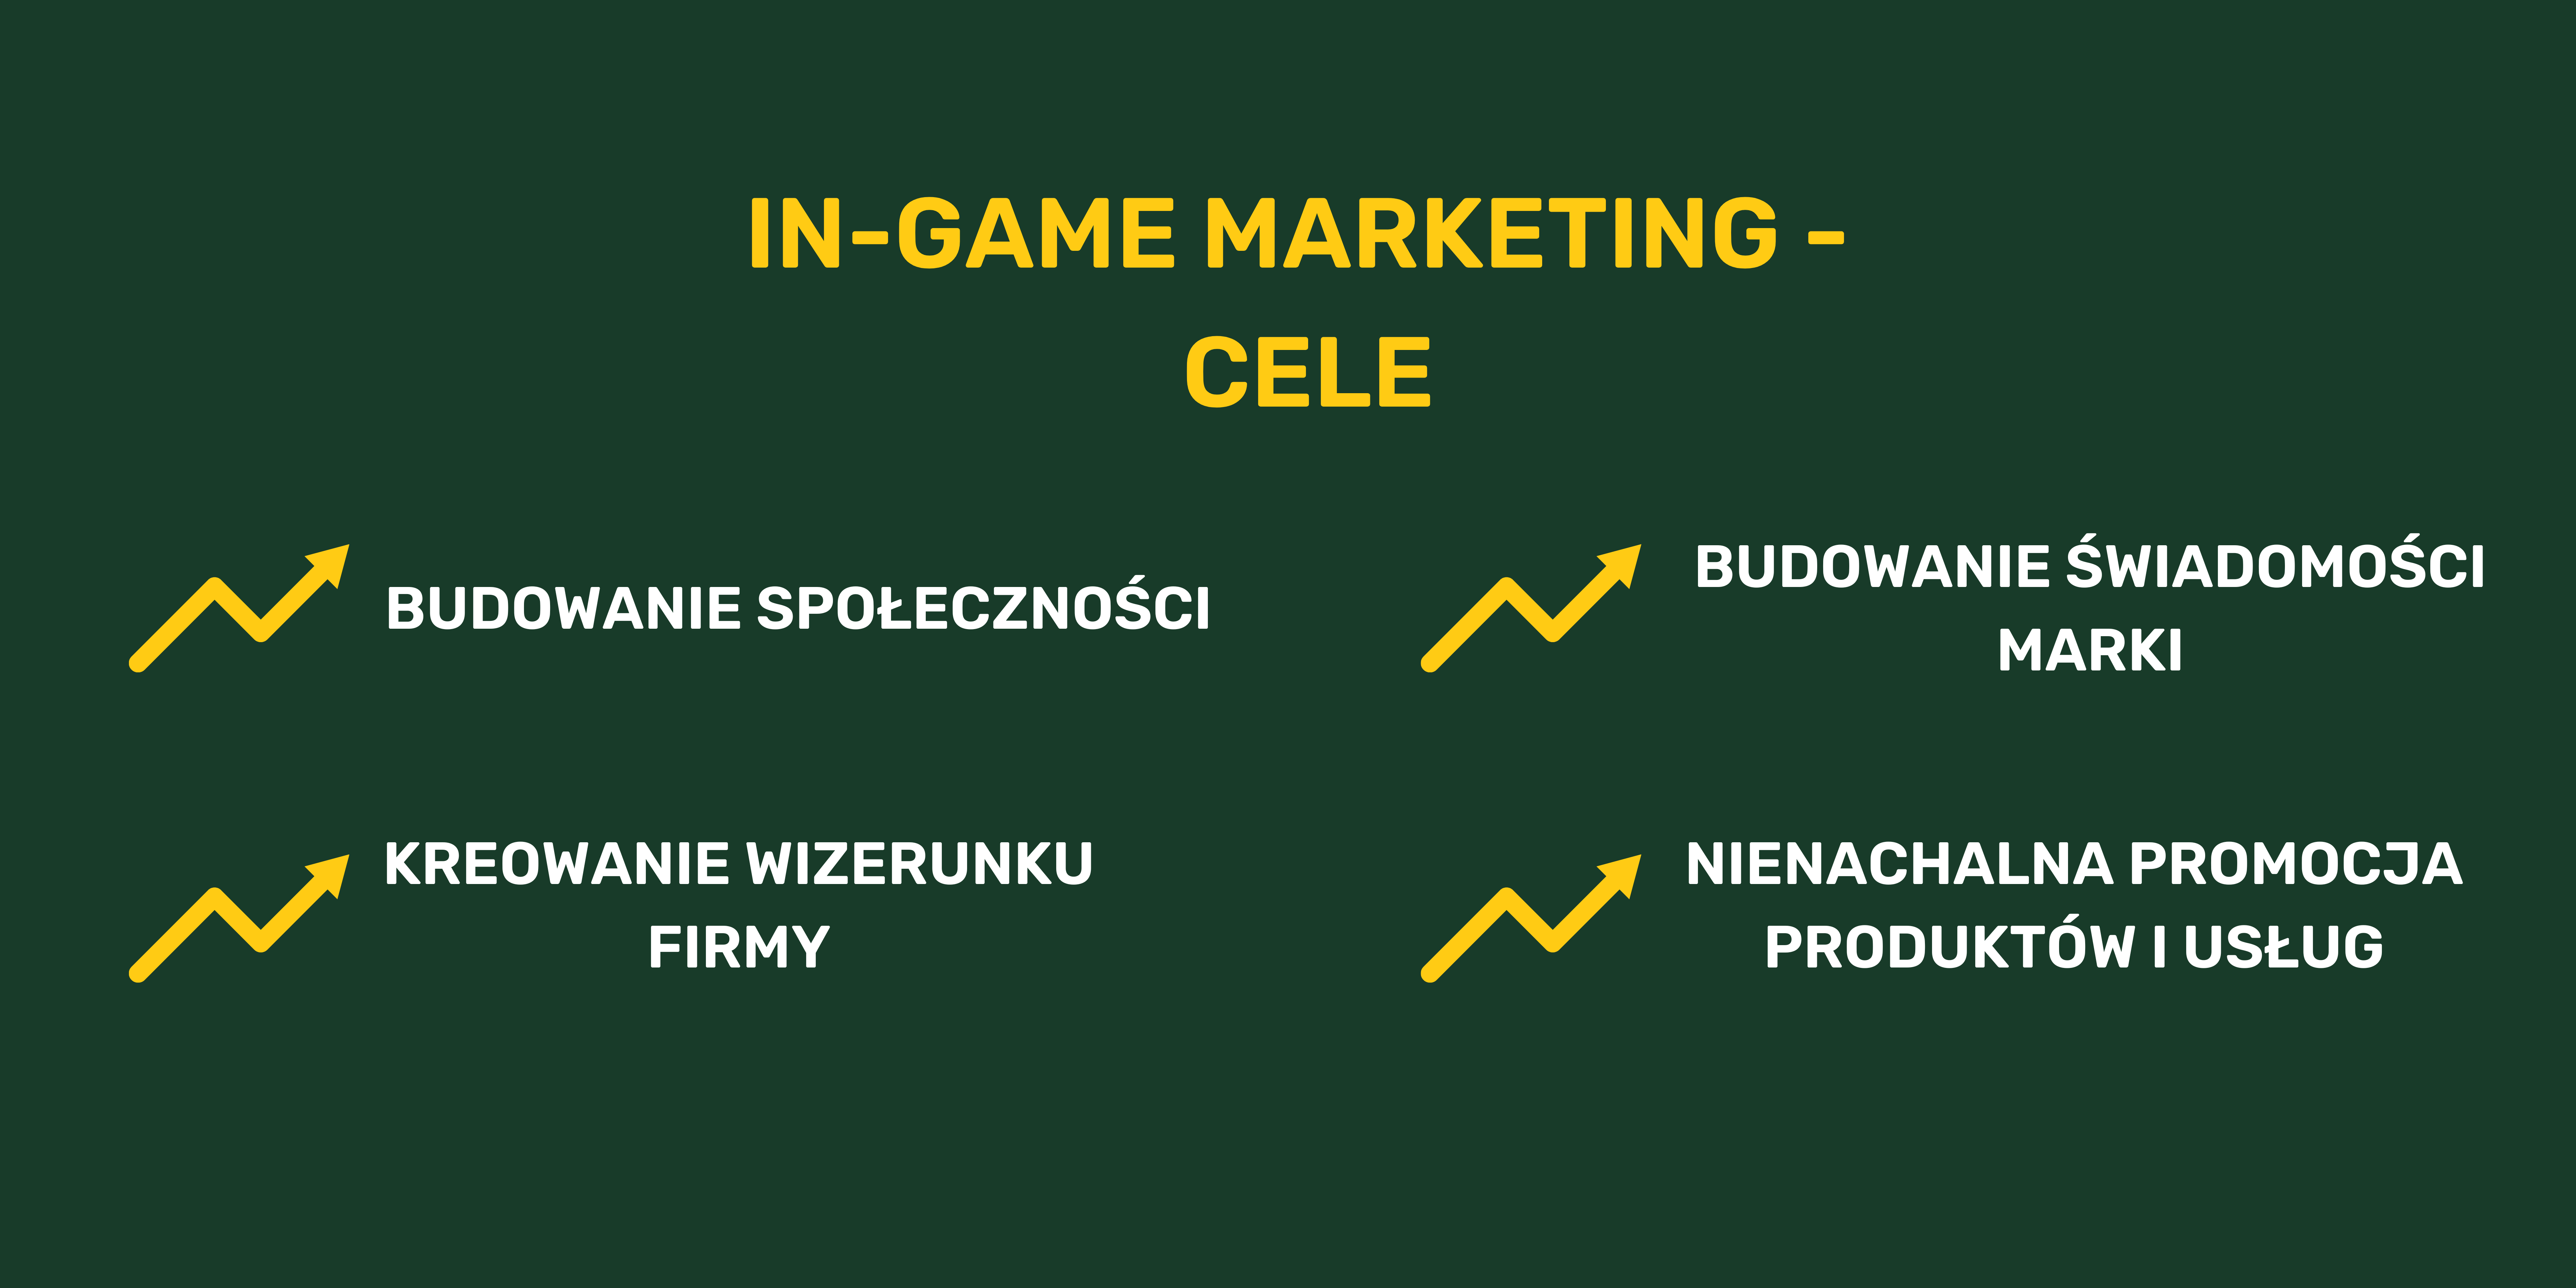 in-game marketing - cele